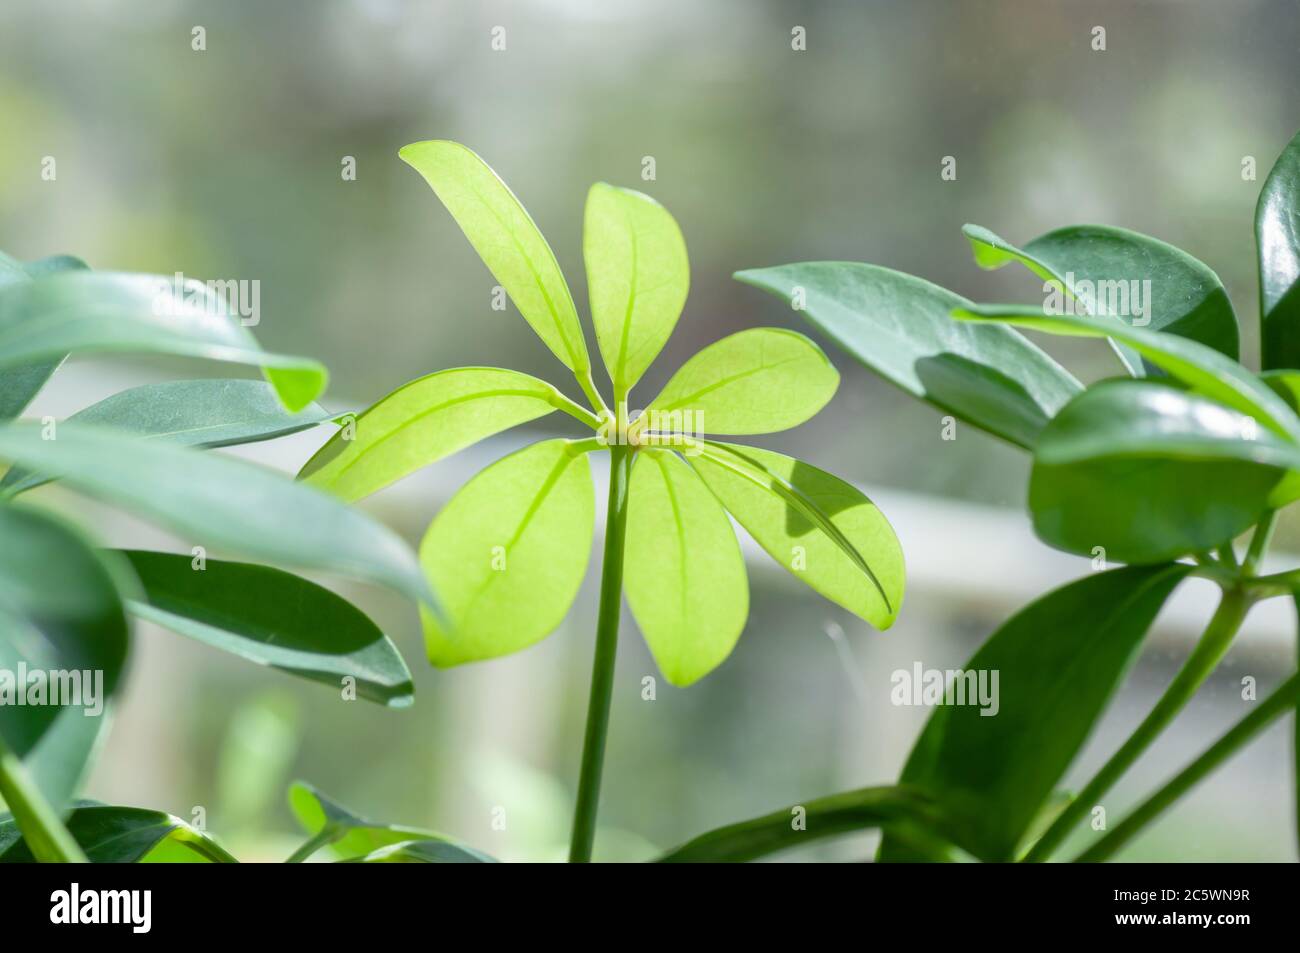 Green, smooth and shinyl eaves of schefflera. Botanical macrophotography for illustration of schefflera. Stock Photo